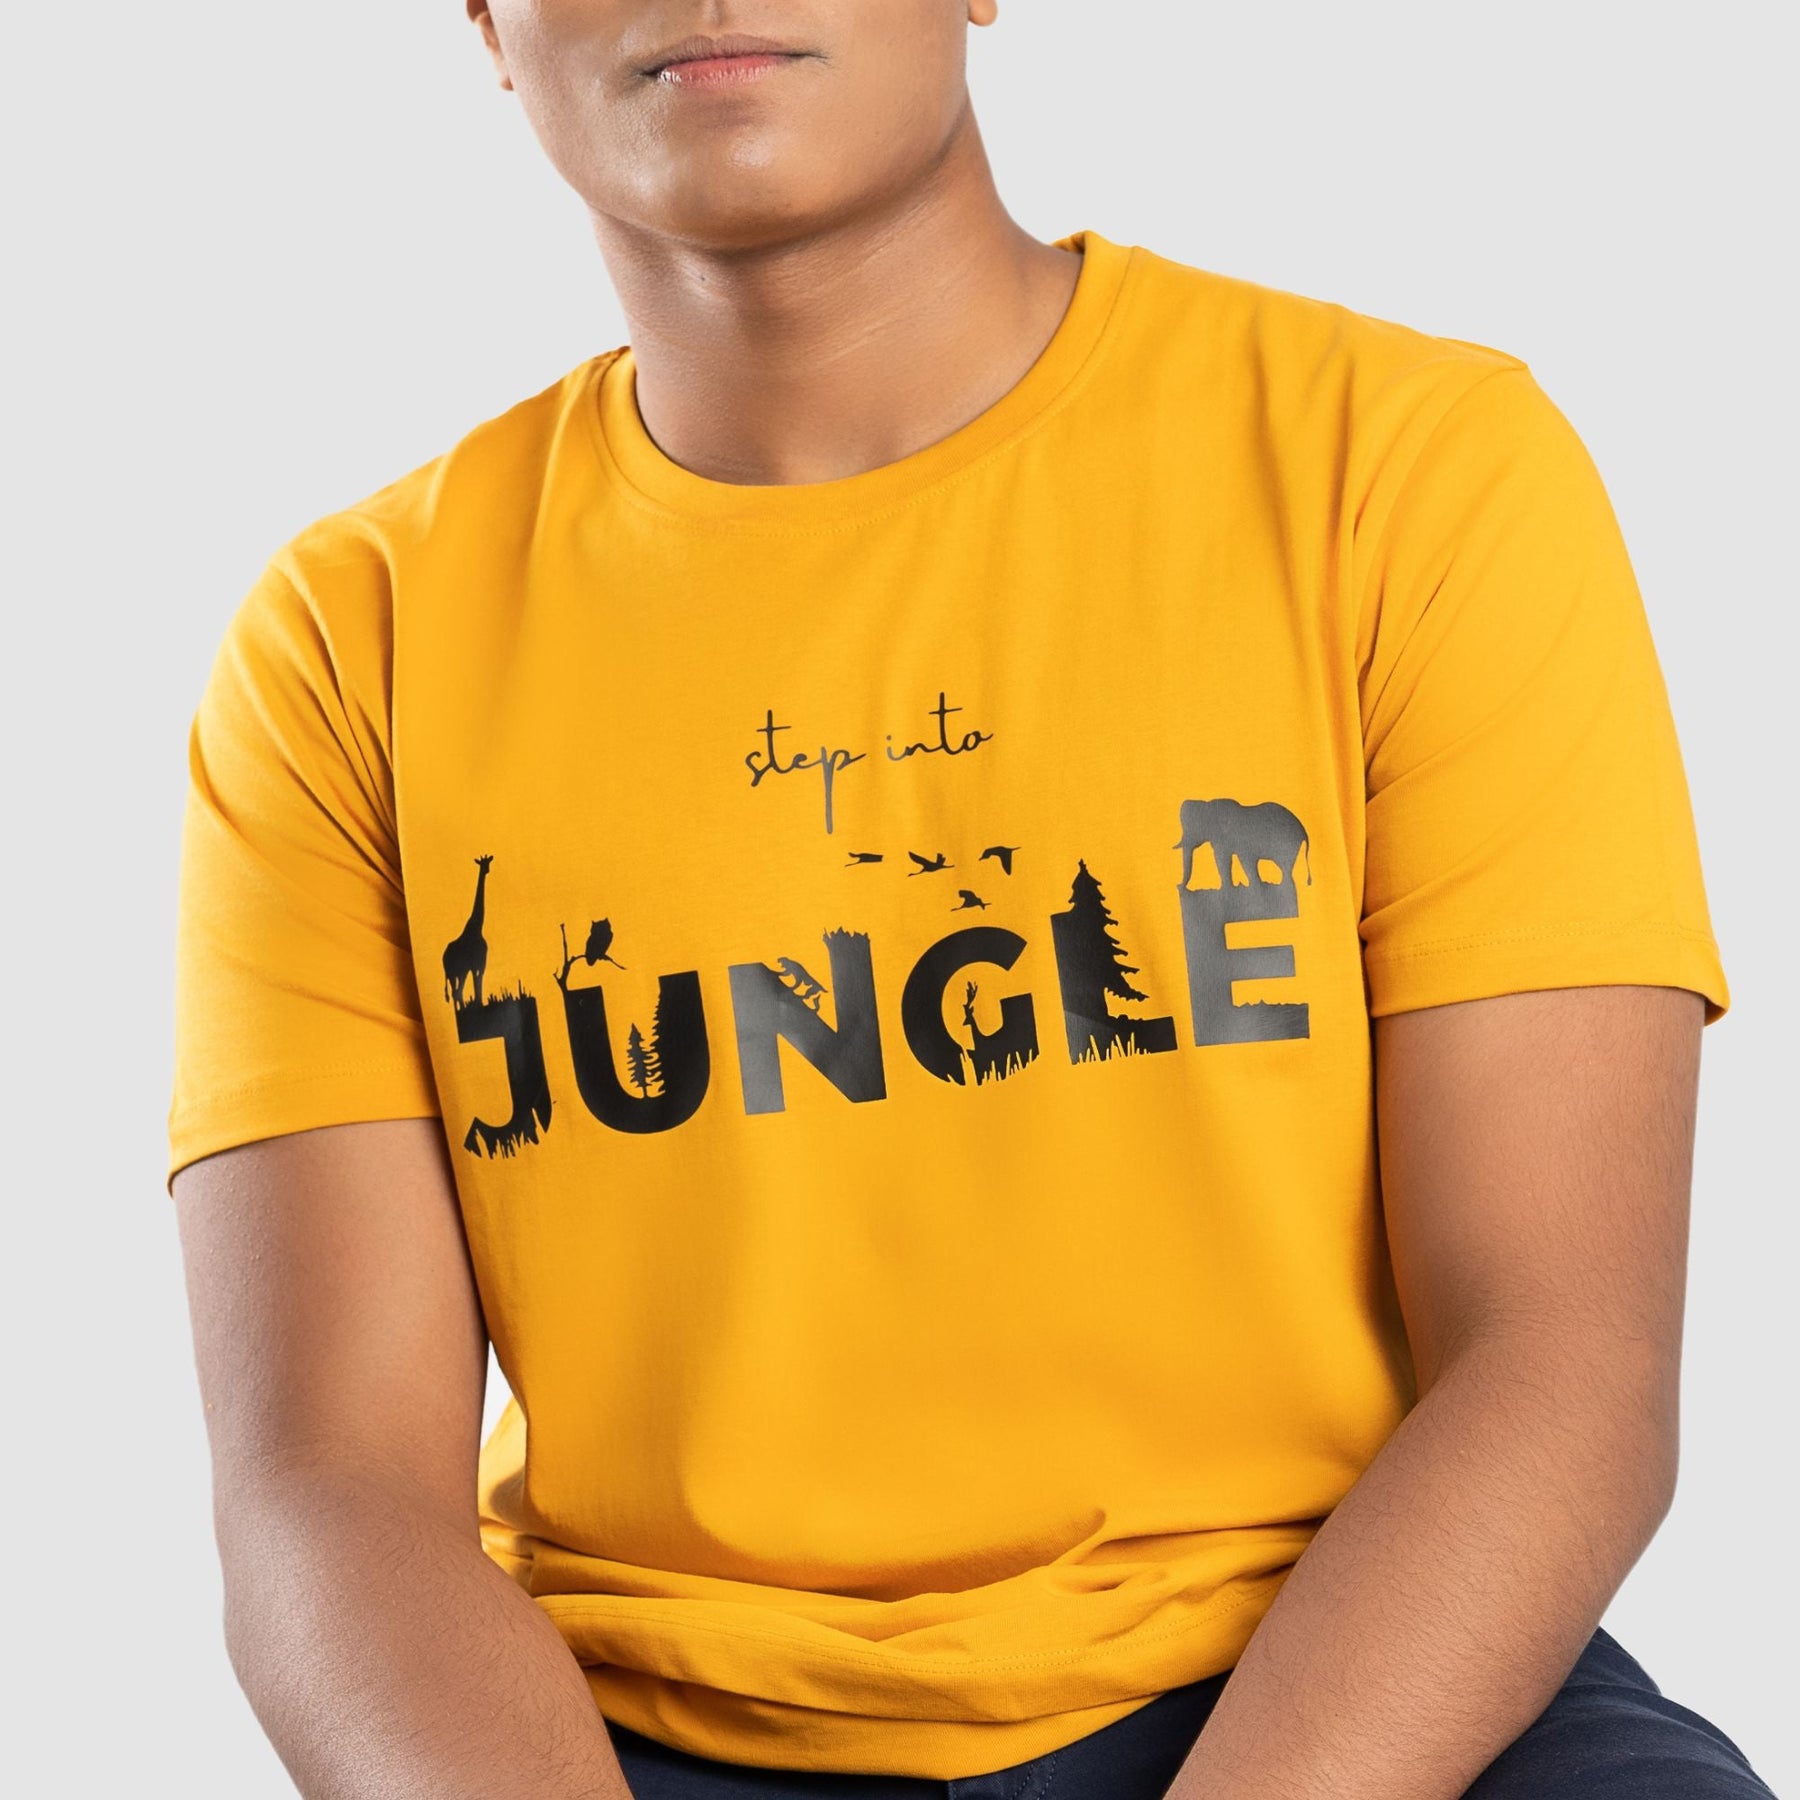 step-into-the-jungle-golden-yellow-round-neck-printed-wildlife-theme-cotton-t-shirt-gogirgit